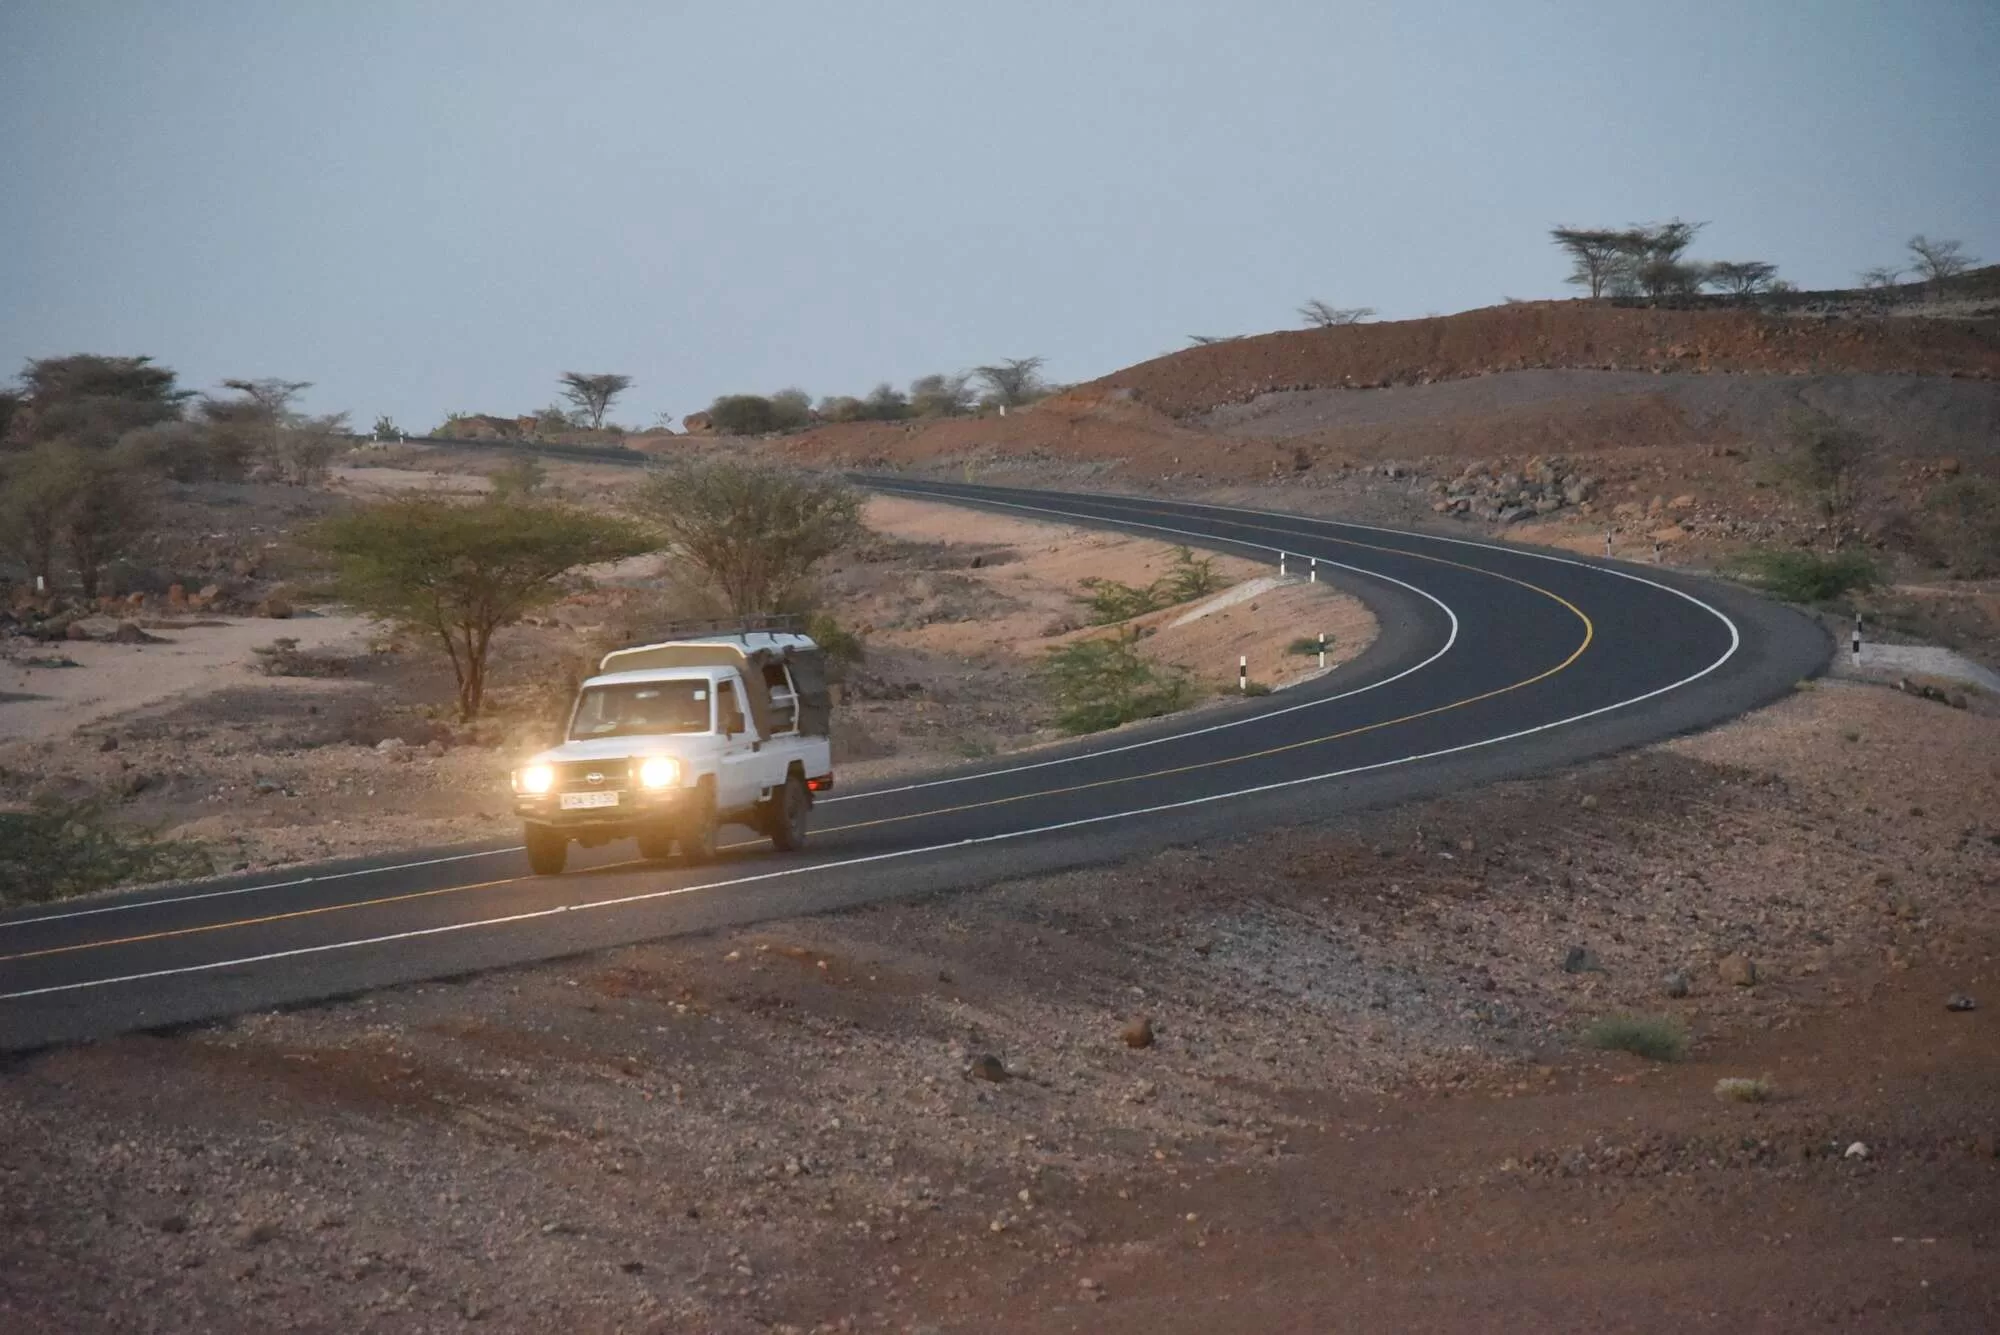 Ethiopia-South Sudan Cross-border road